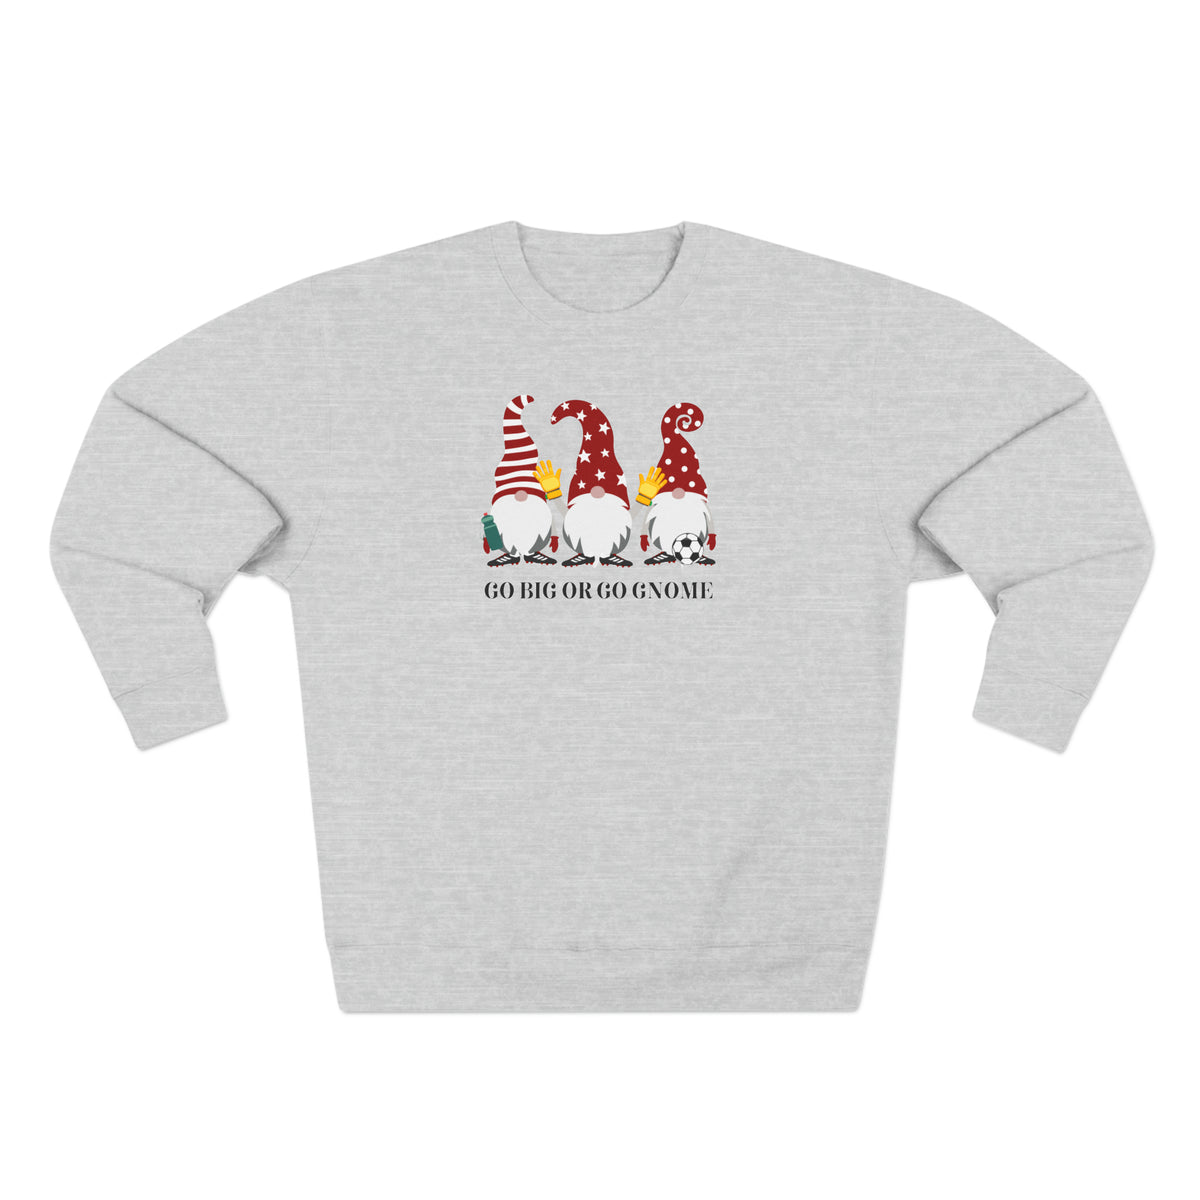 Go Big Or Go Gnome Adult Crewneck Sweatshirt